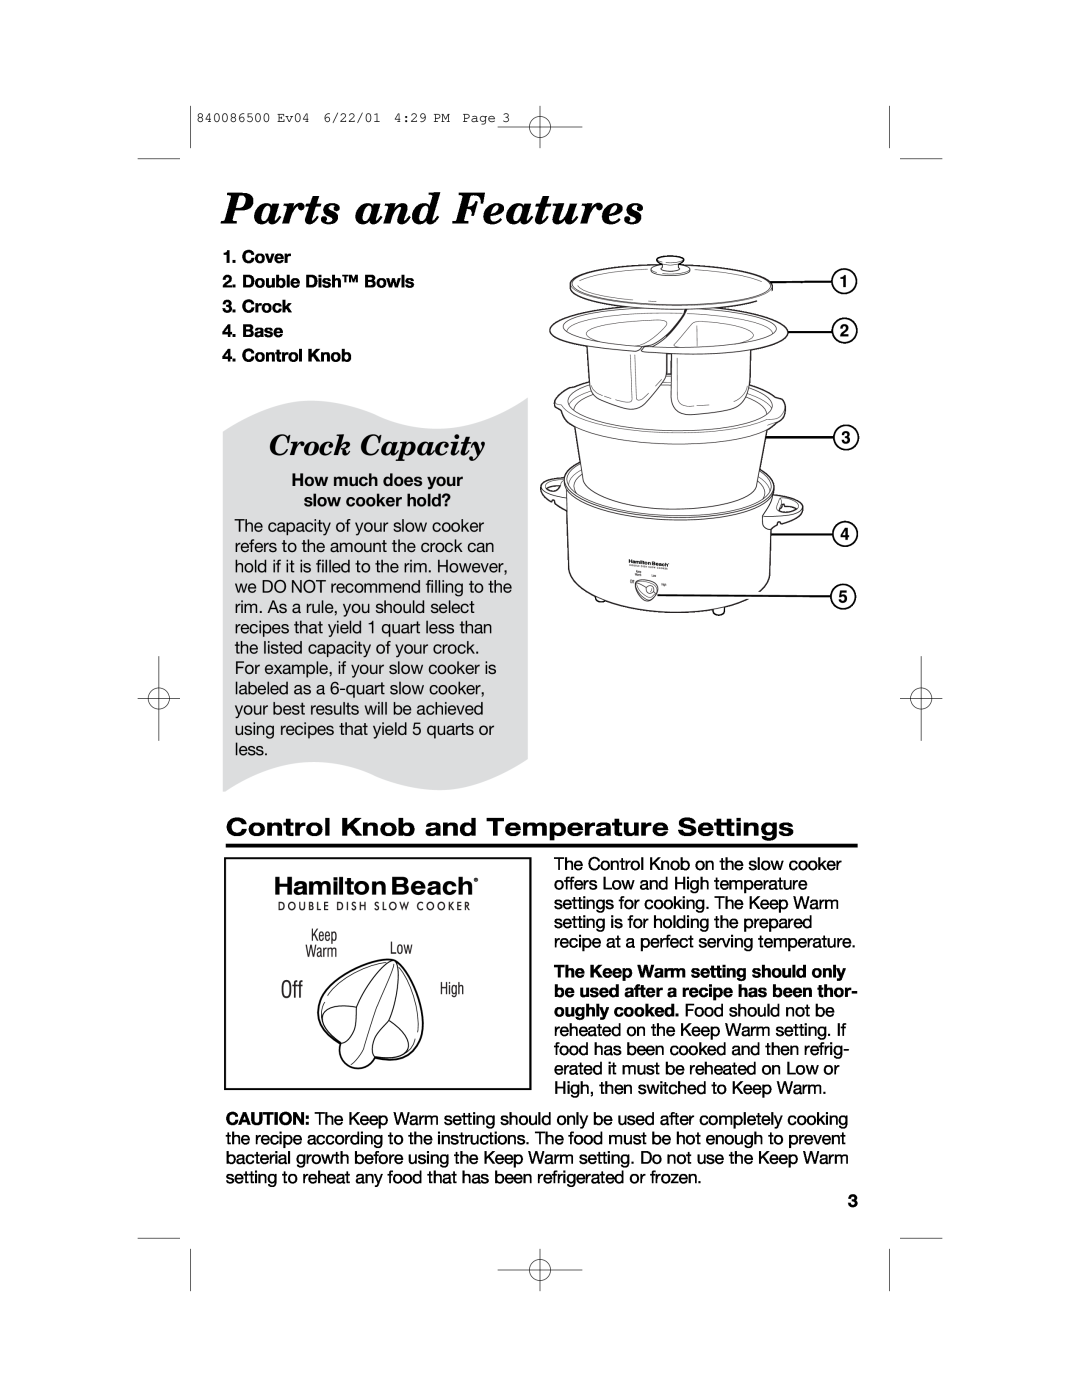 Hamilton Beach 33158 manual Parts and Features, Crock Capacity, Control Knob and Temperature Settings 